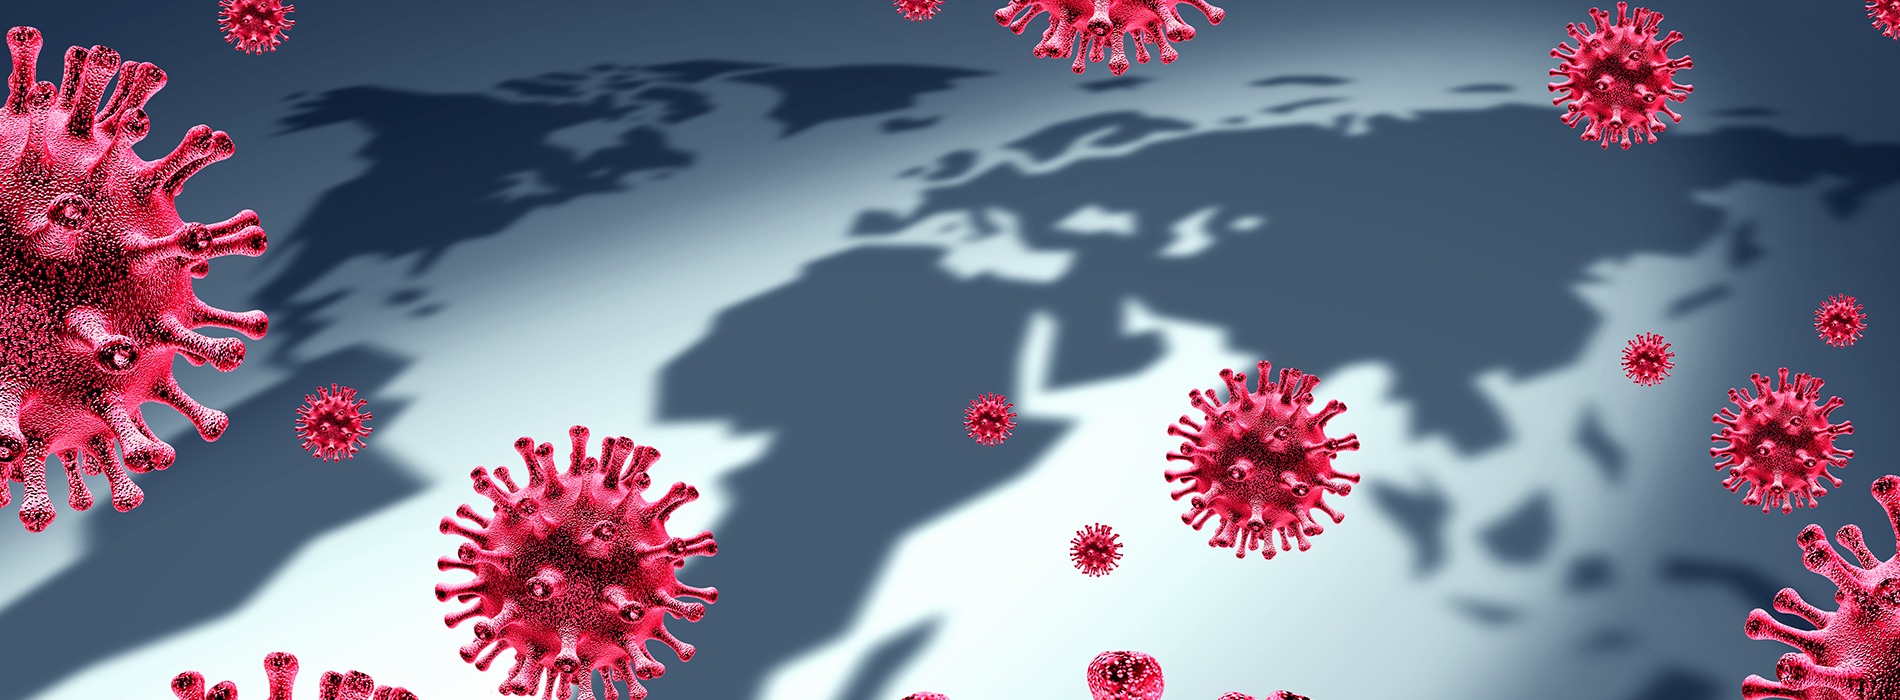 коронавирус и синонимы картинки